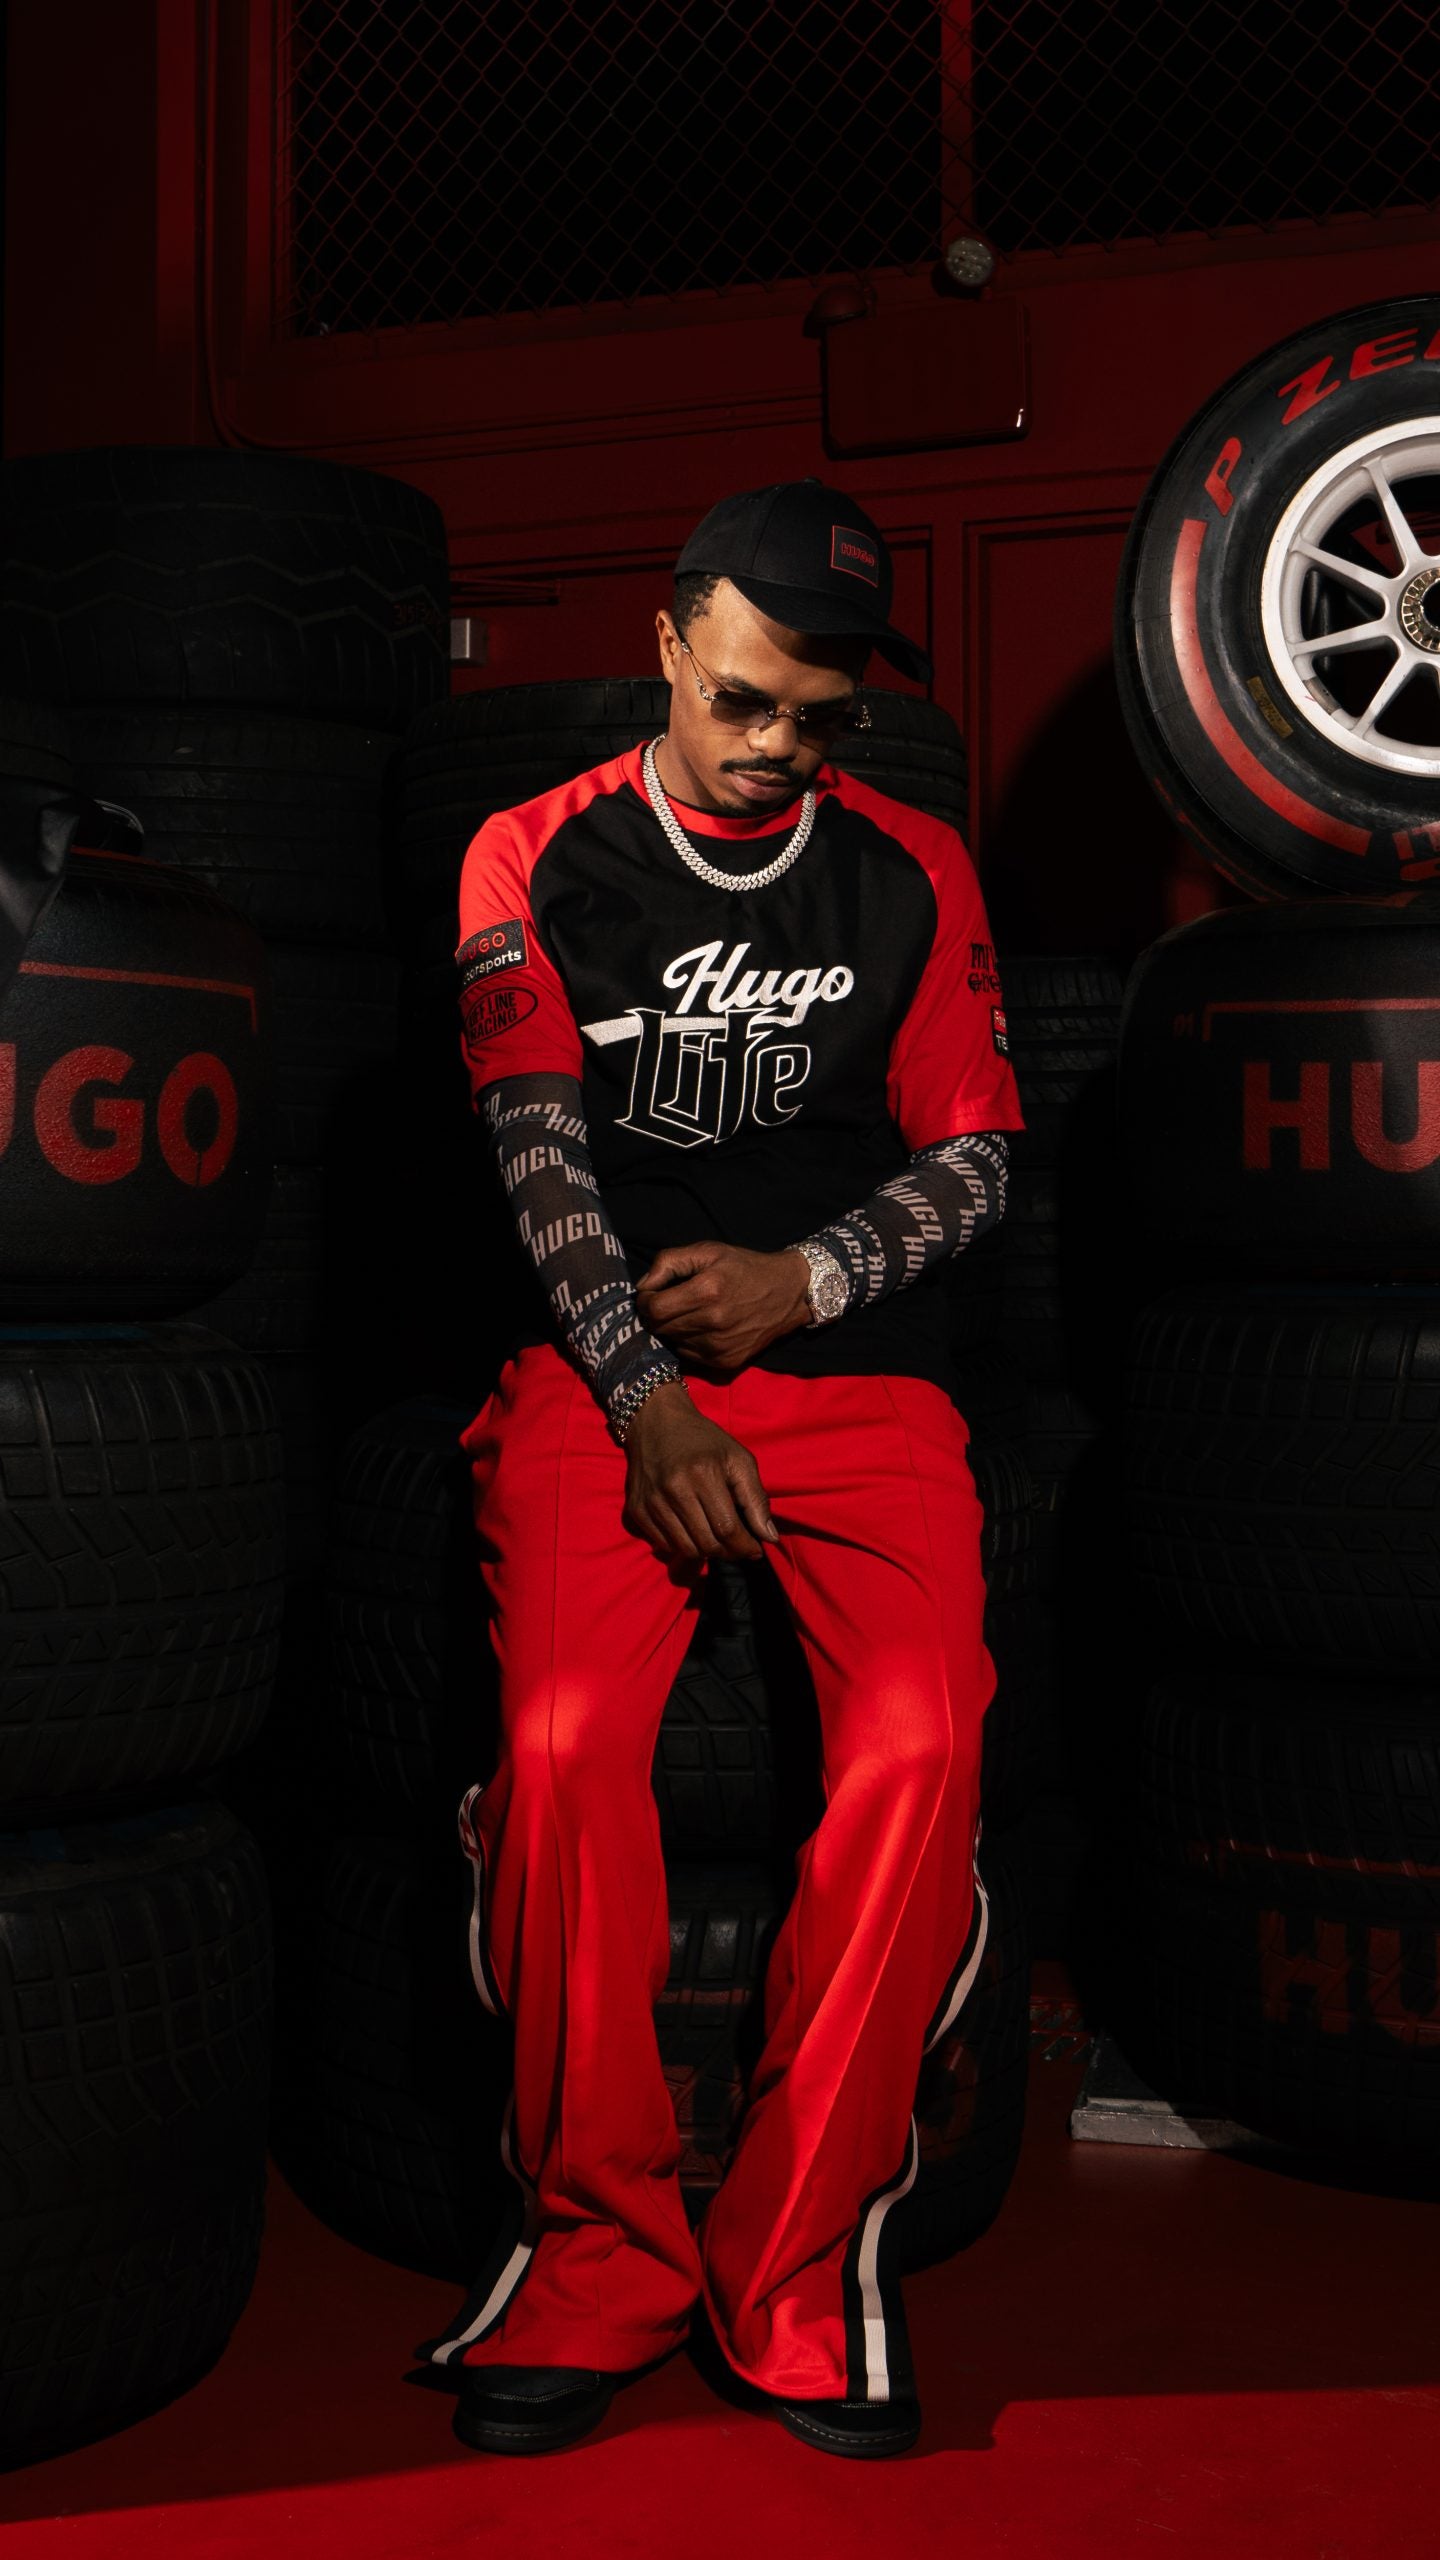 Inside HUGO’s Motorsport-Themed GARAGE During Miami Grand Prix 